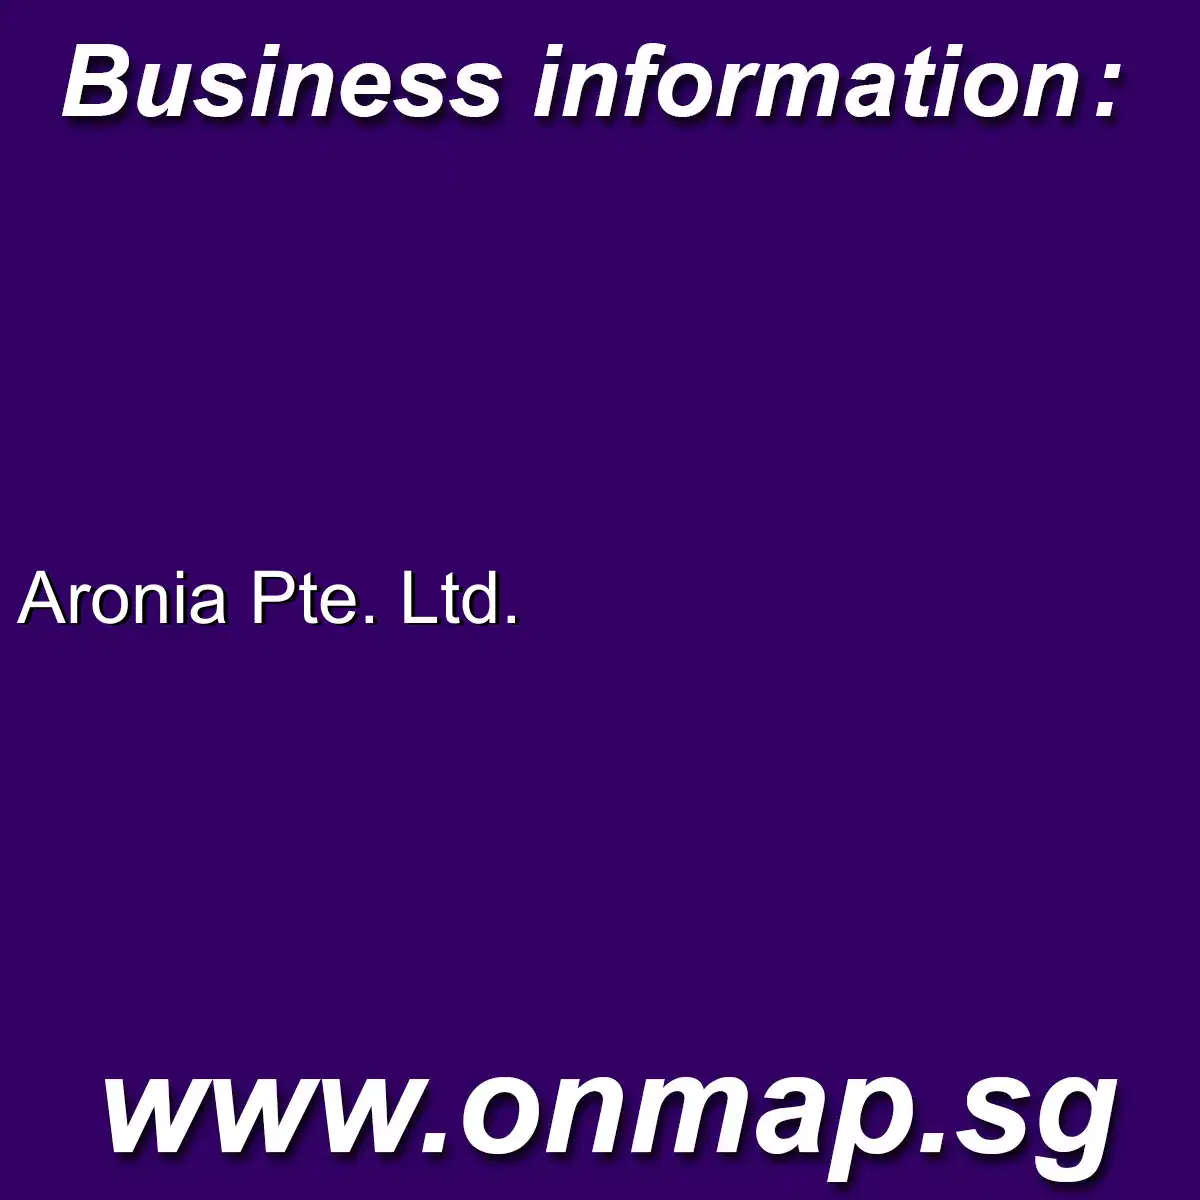 Aronia Pte. Ltd. - Details, Locations, Reviews